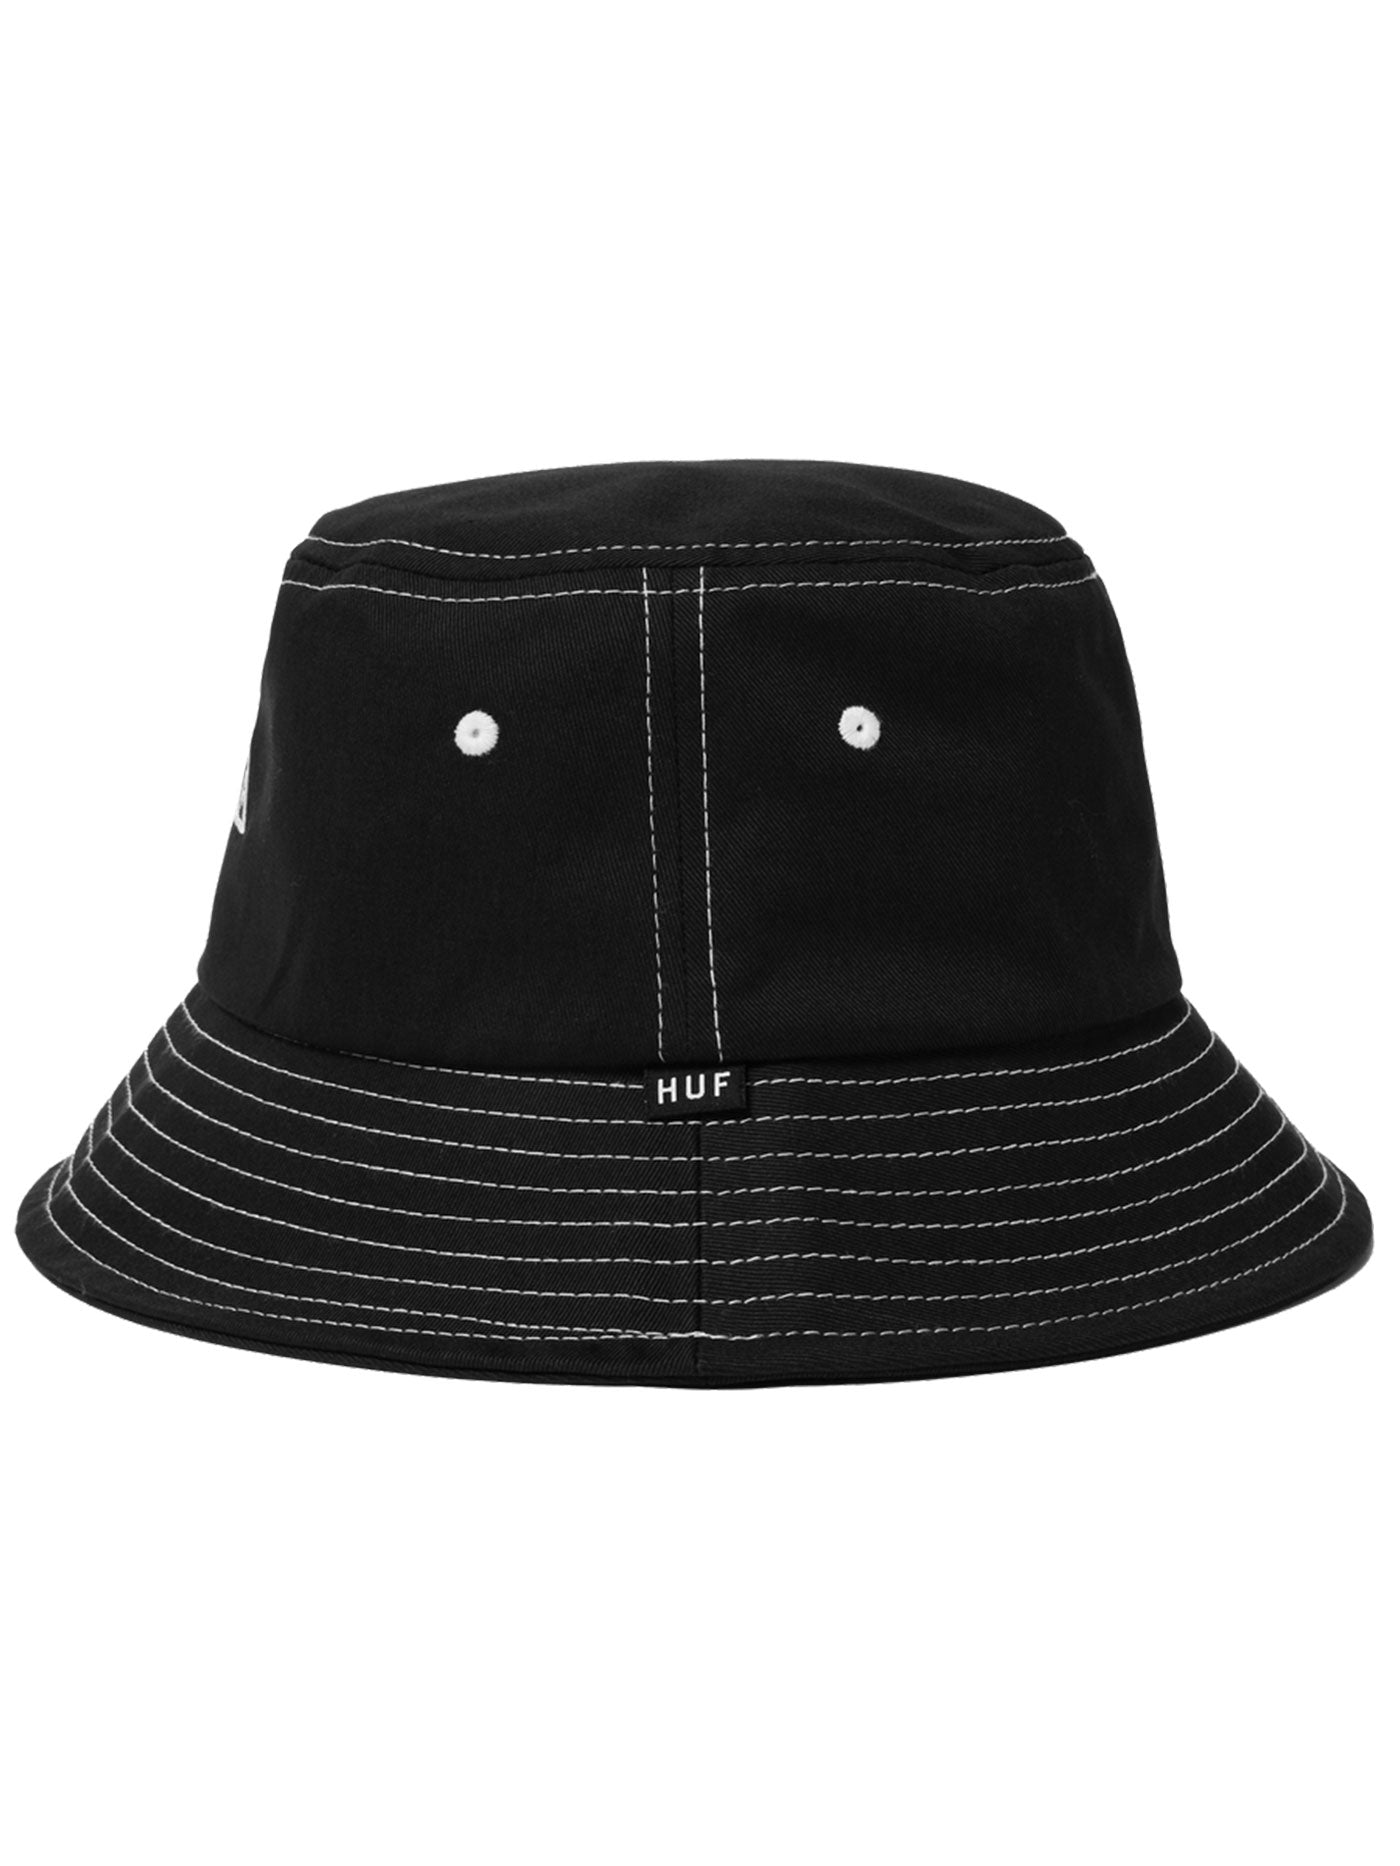 Huf Set It Bucket Hat